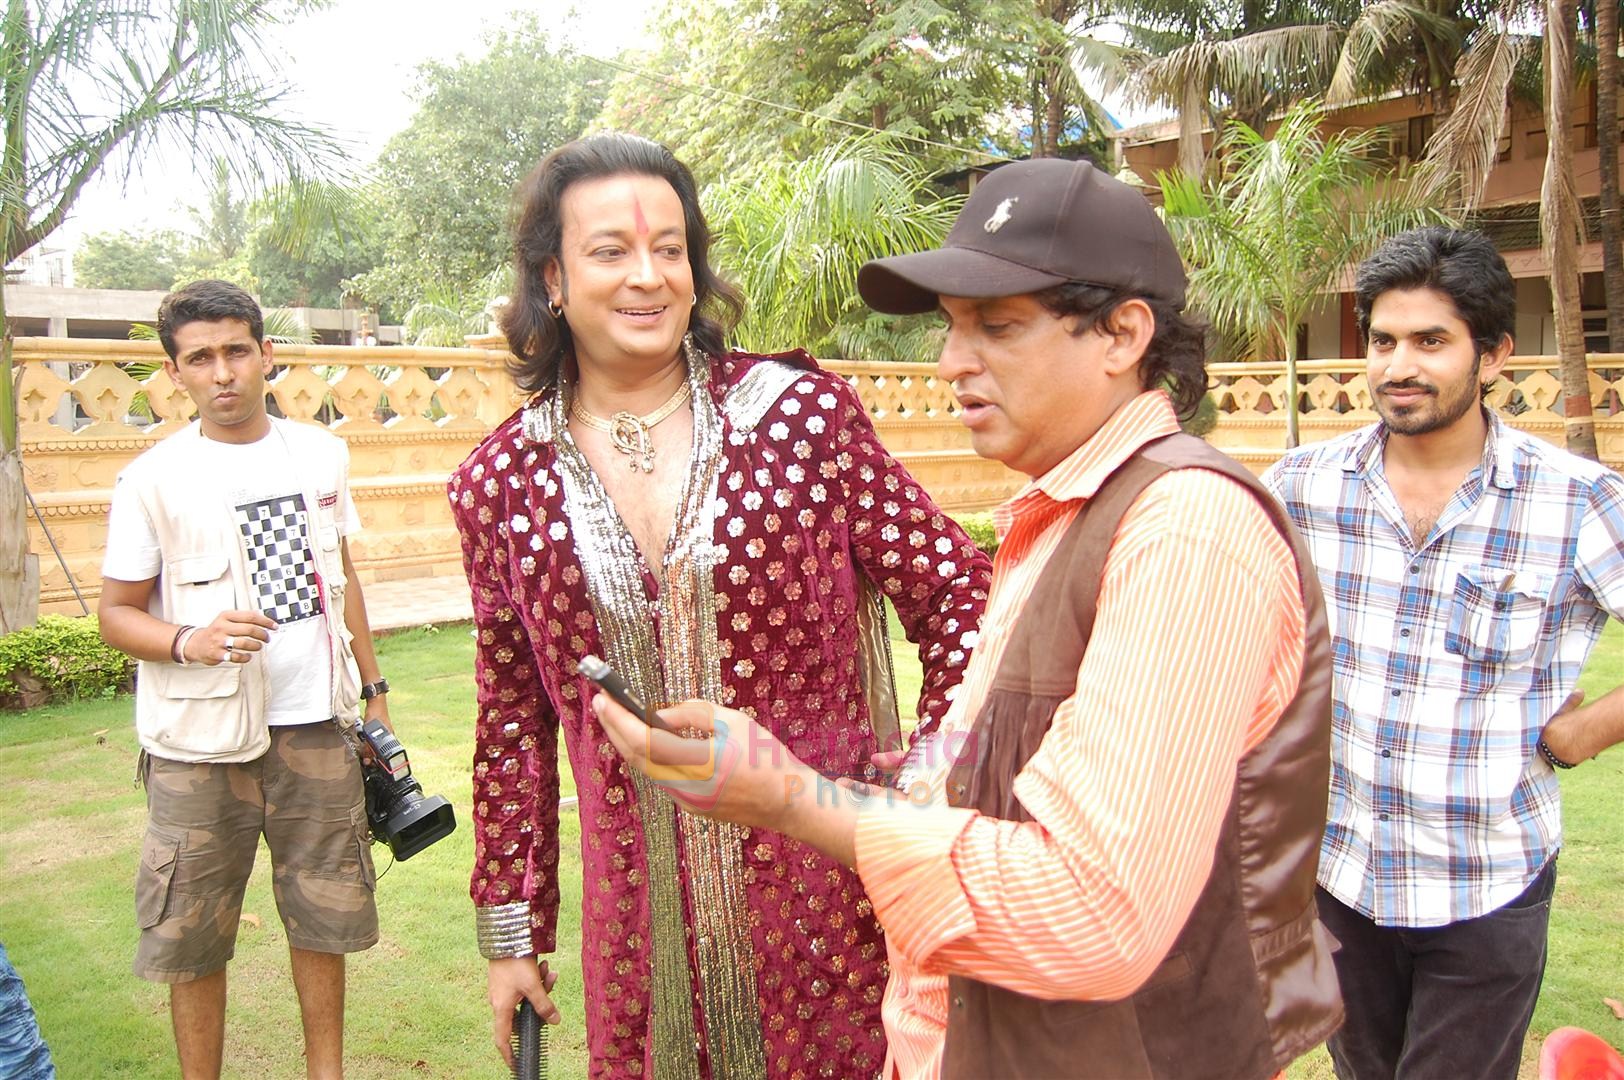 Santosh Shukla as Virendra Singh with director sunil agnihotri ON SETS OF KAHAANI CHANDRAKAANTA KI.